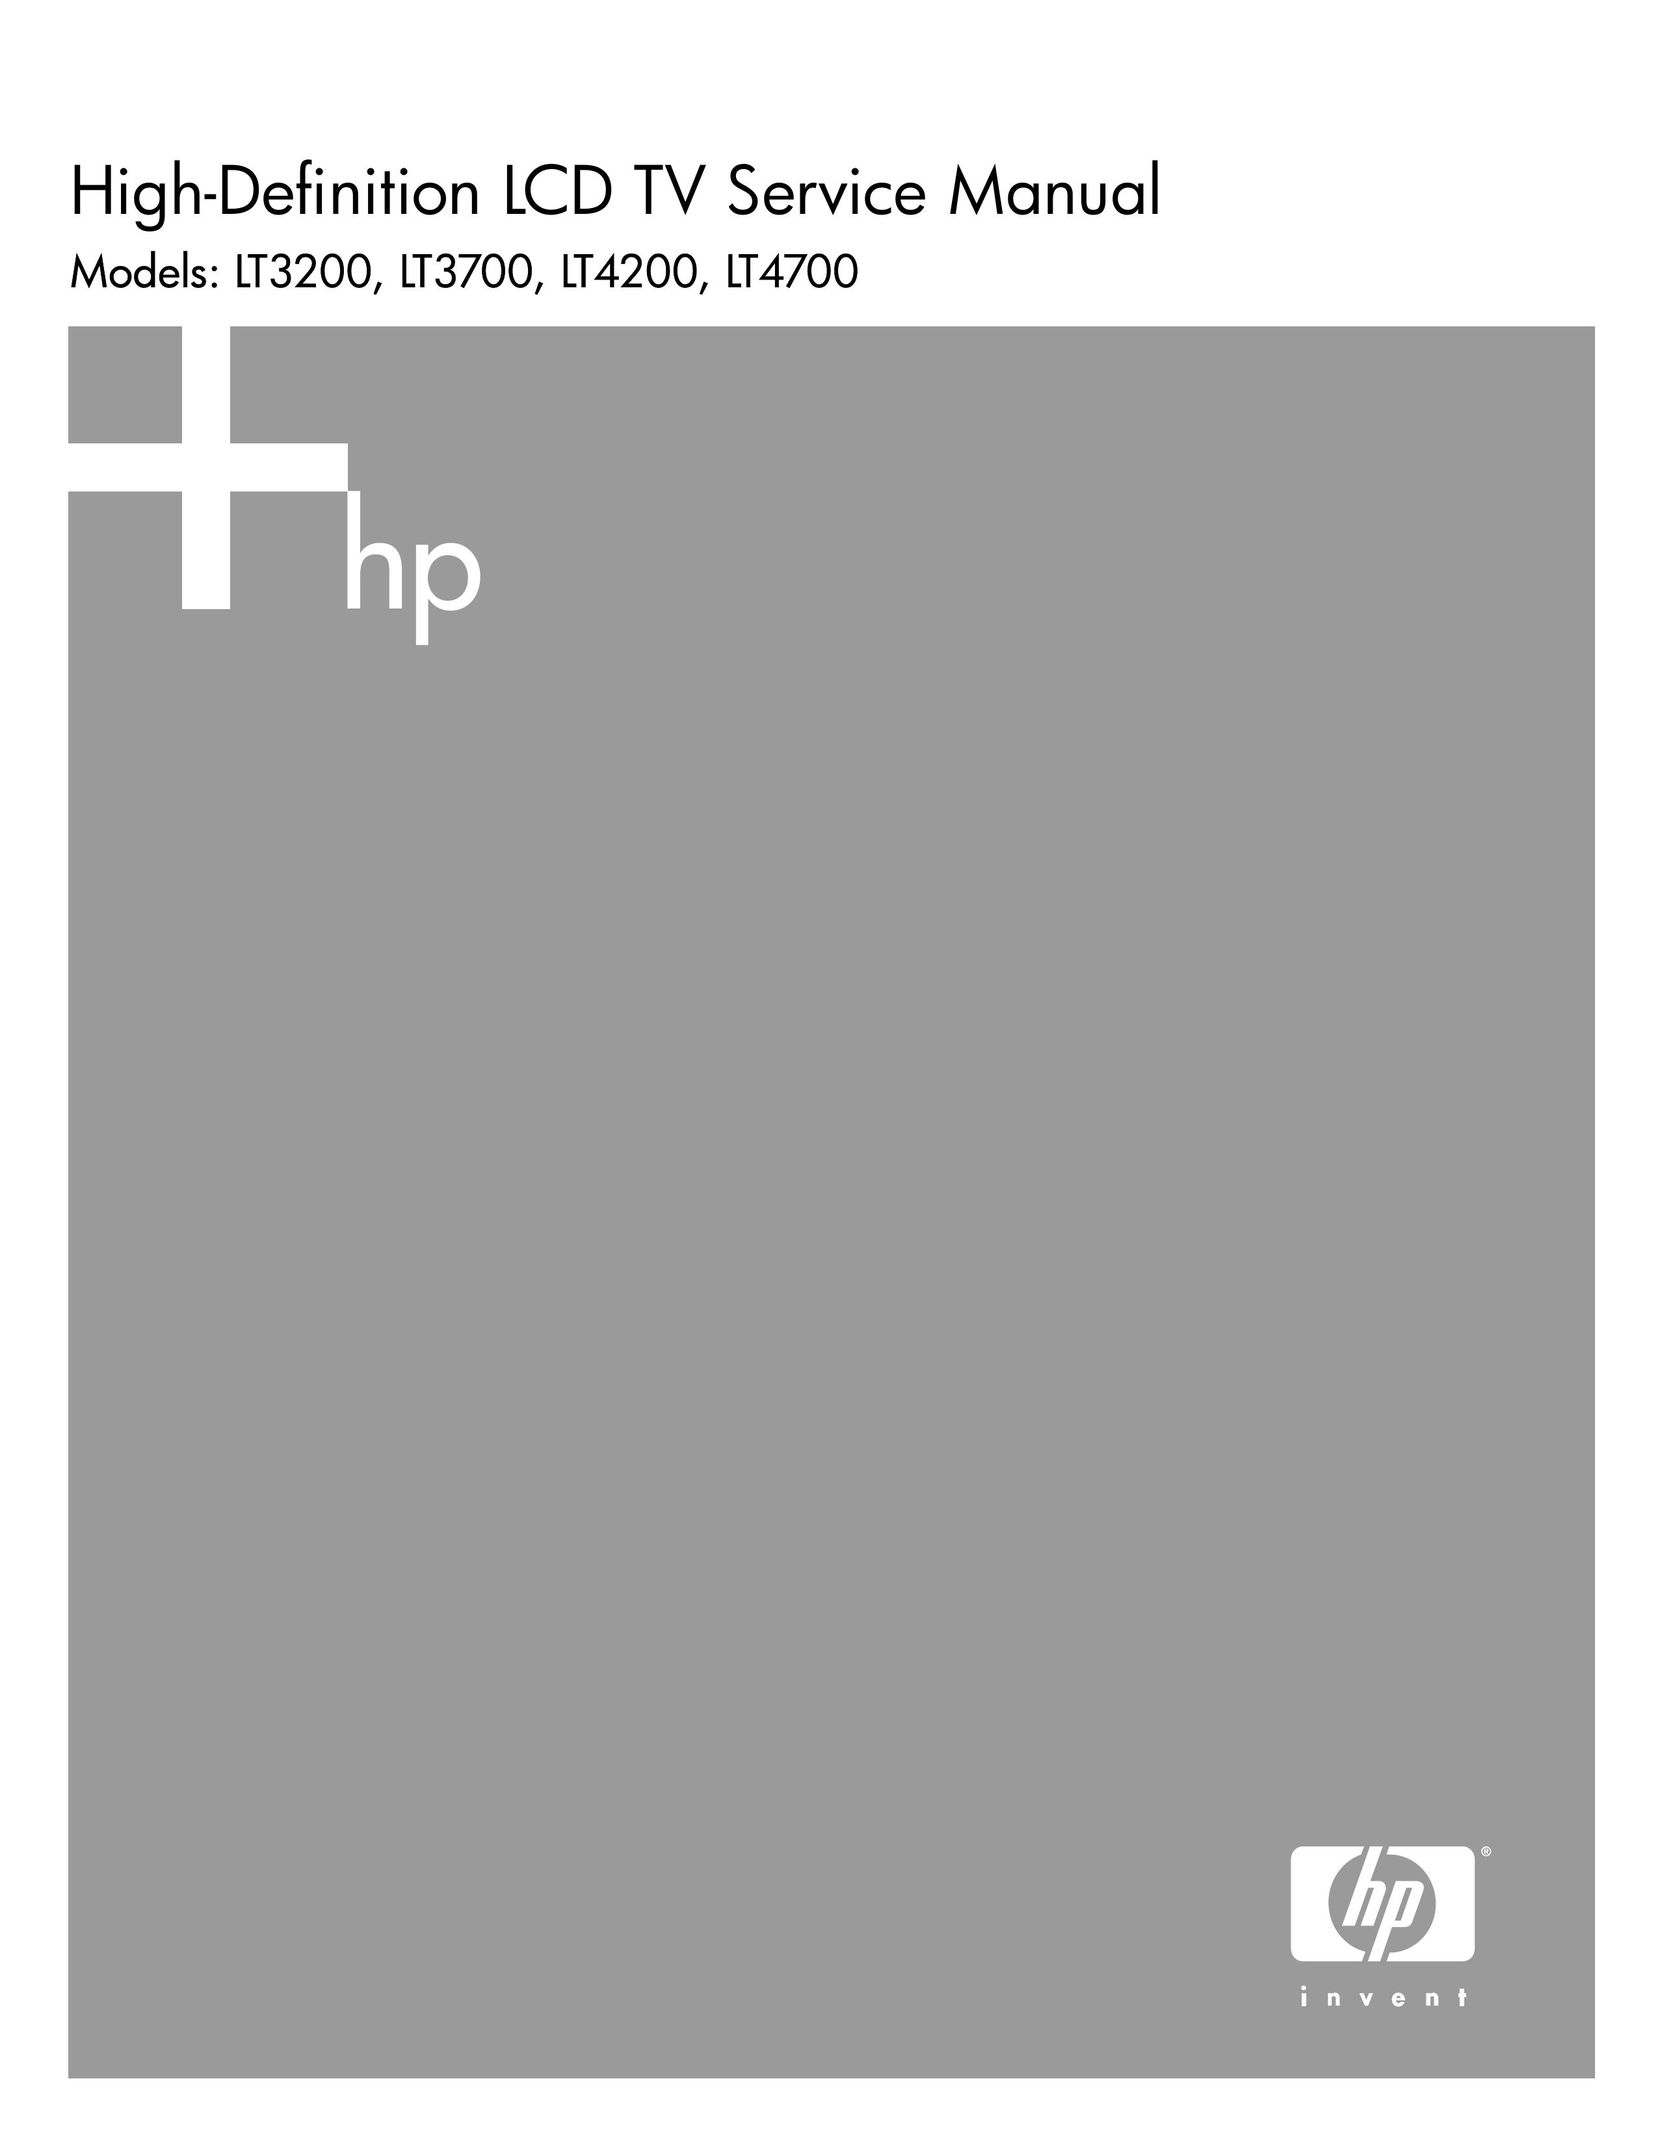 HP (Hewlett-Packard) LT4700 Flat Panel Television User Manual